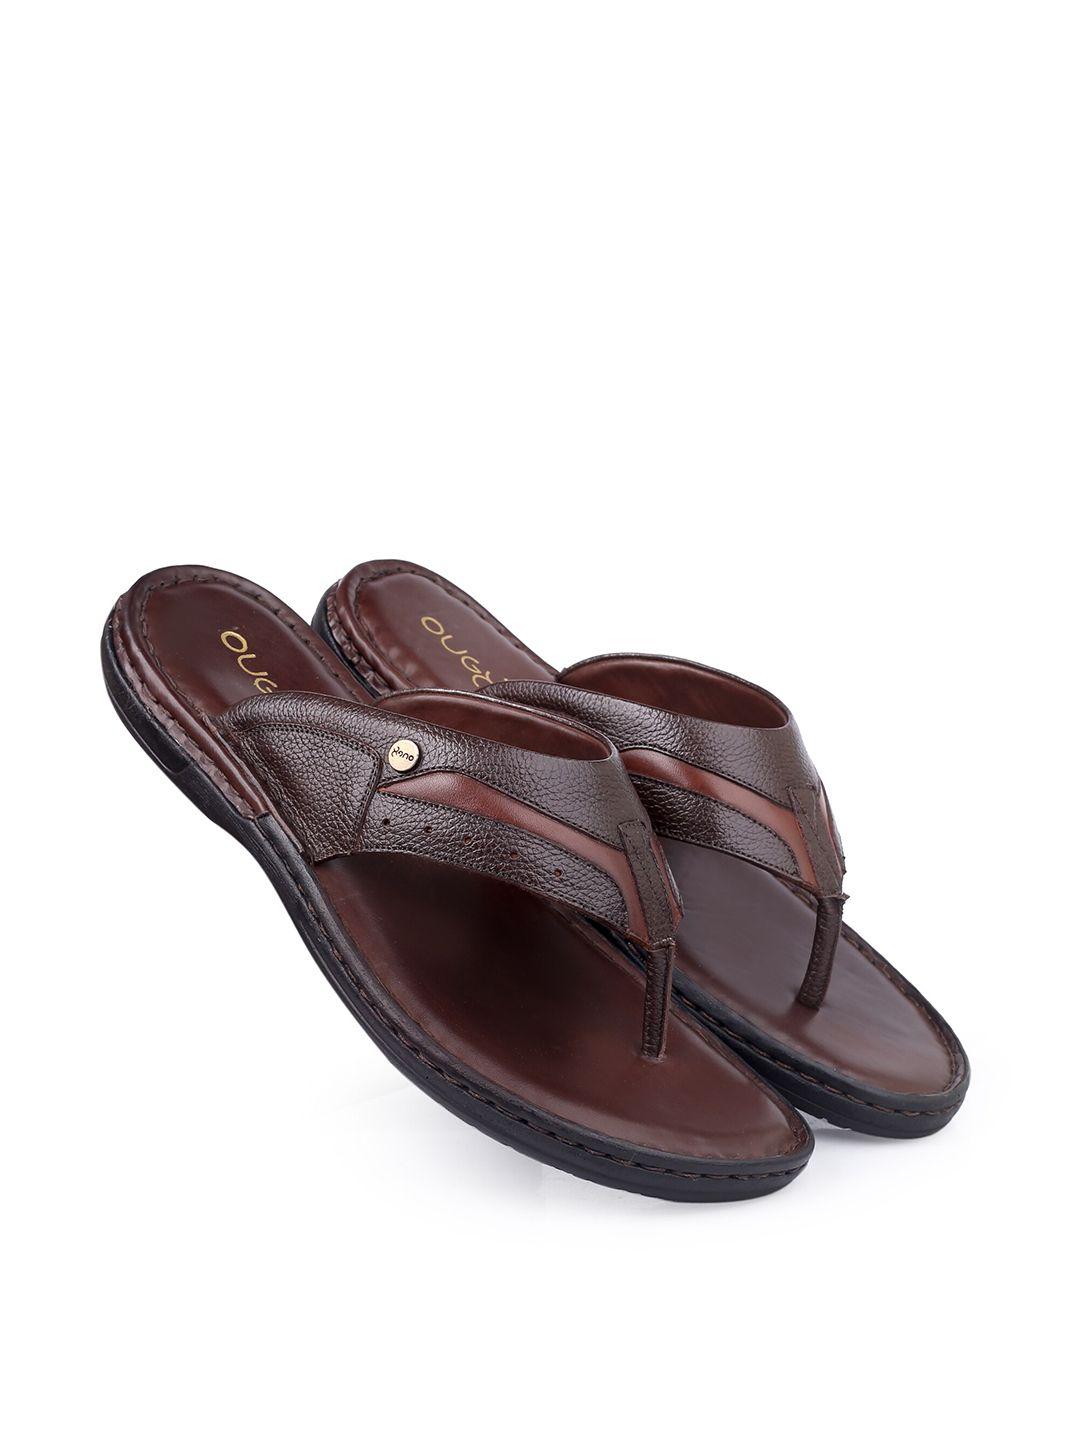 one8 select by virat kohli men leather slippers